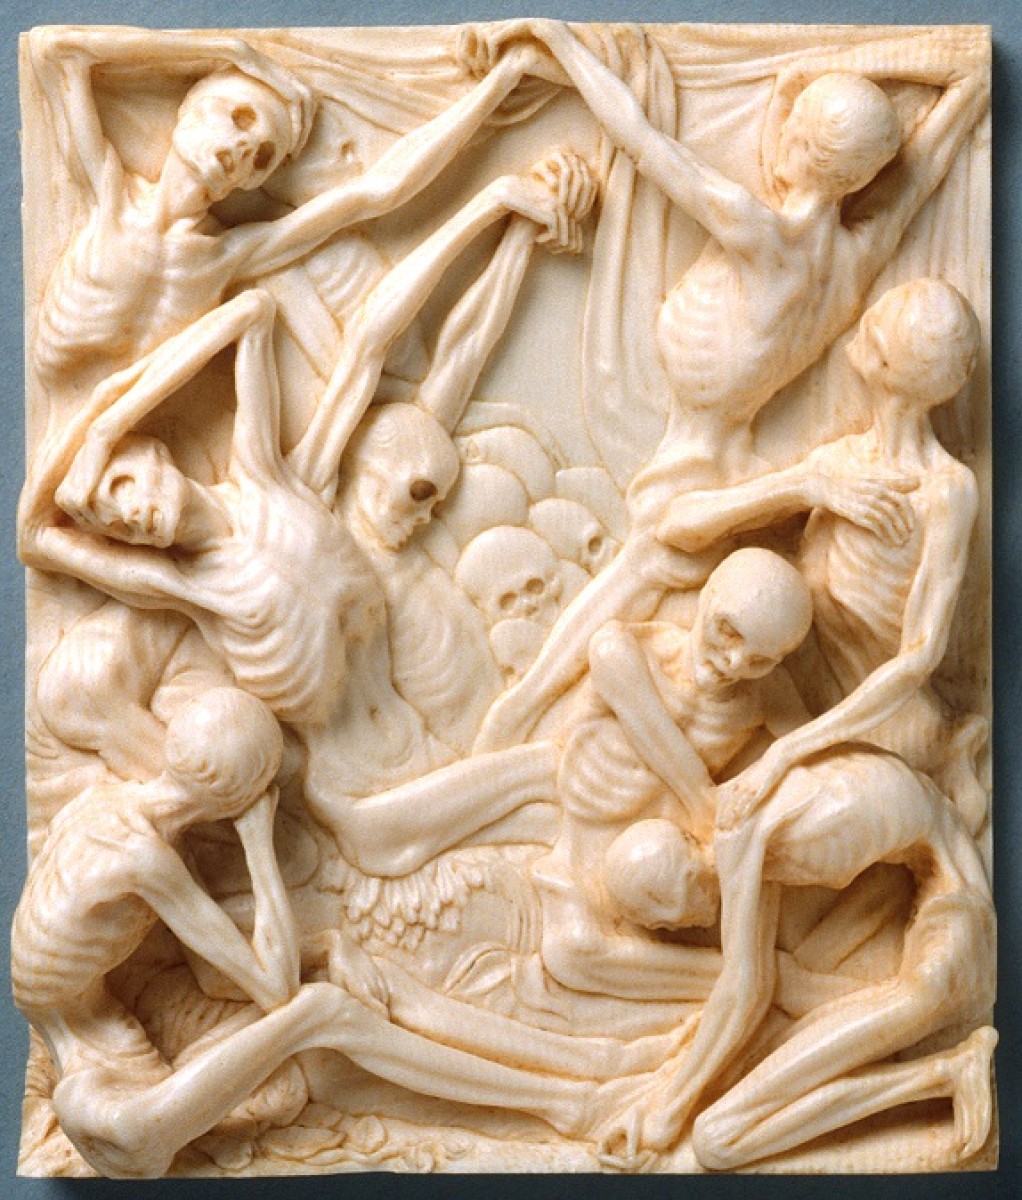 Skeletons carved into ivory